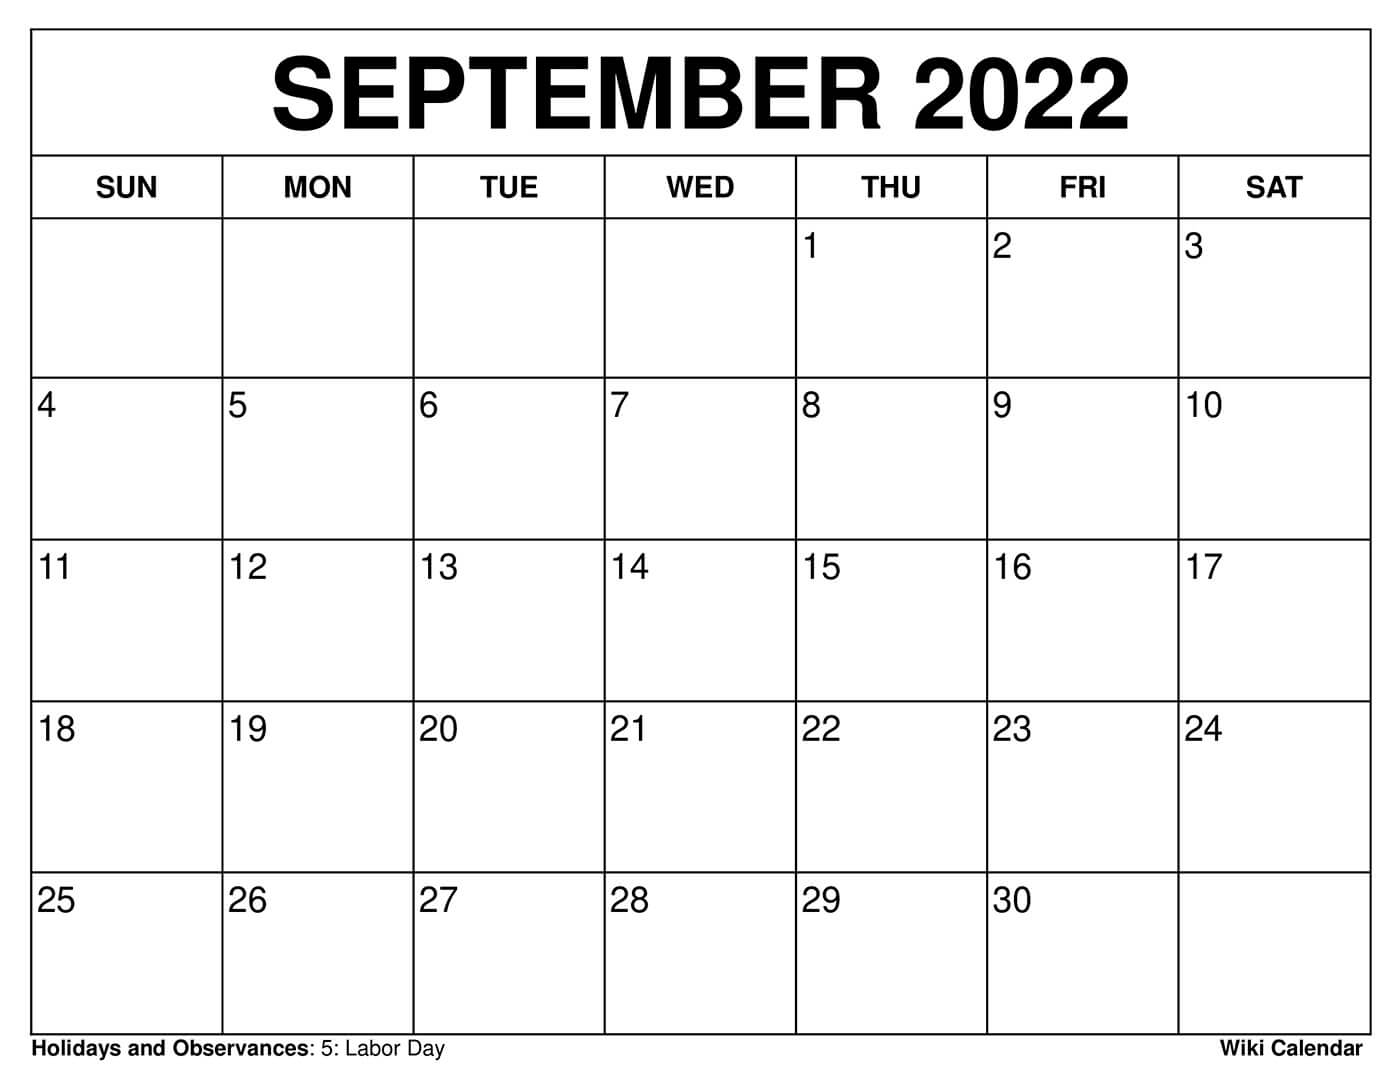 September 2022 Calendar Printable Free Free Printable September 2022 Calendars - Wiki Calendar